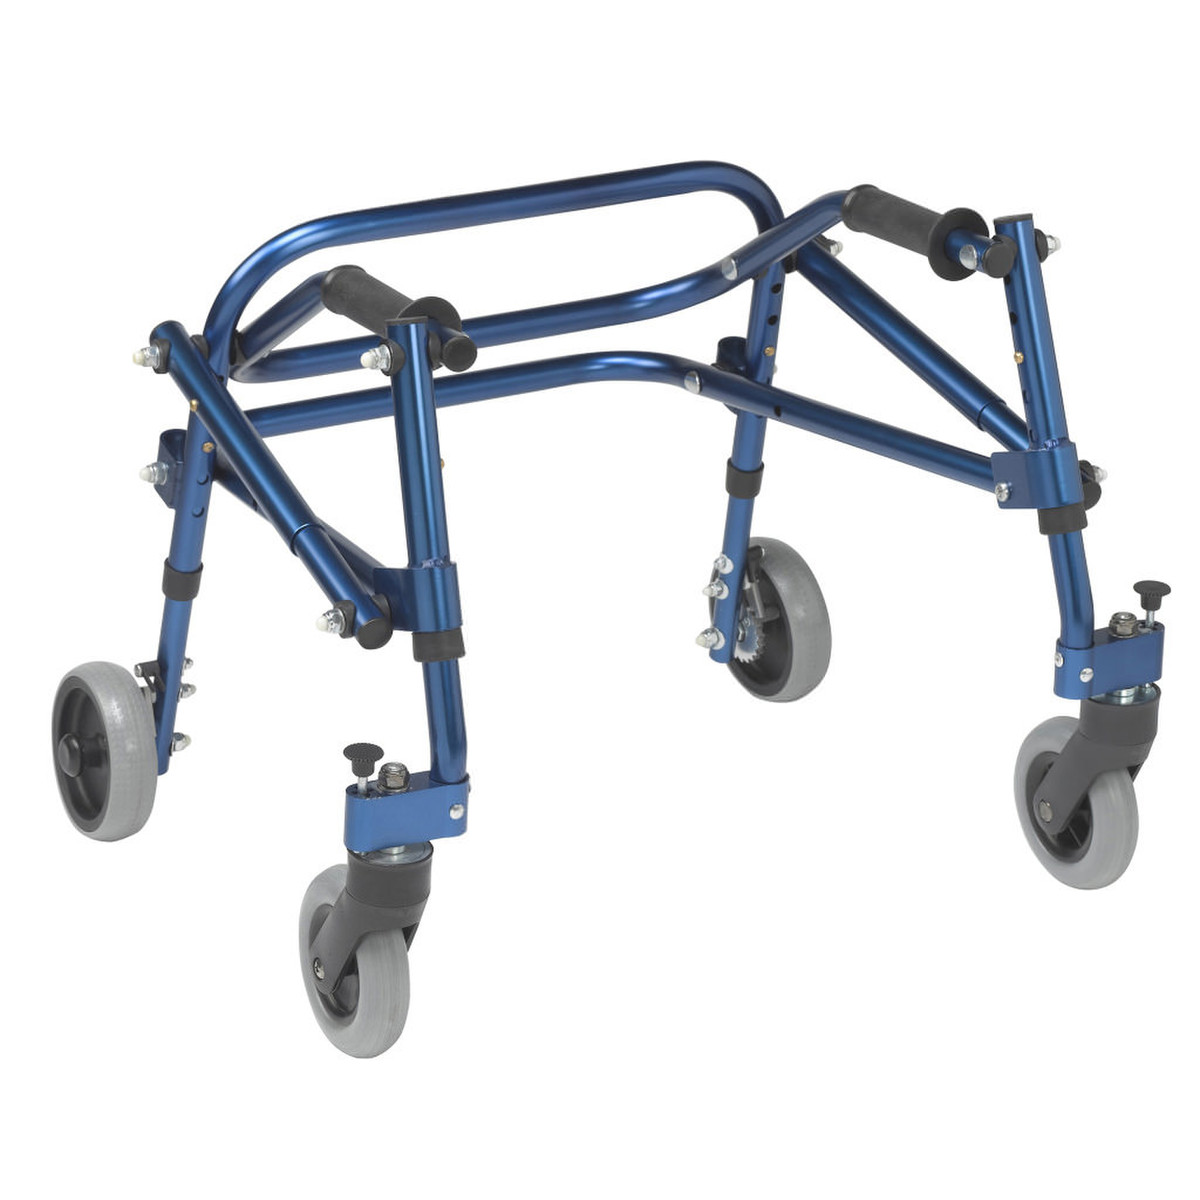 Convaid Crusier Lightweight Stroller